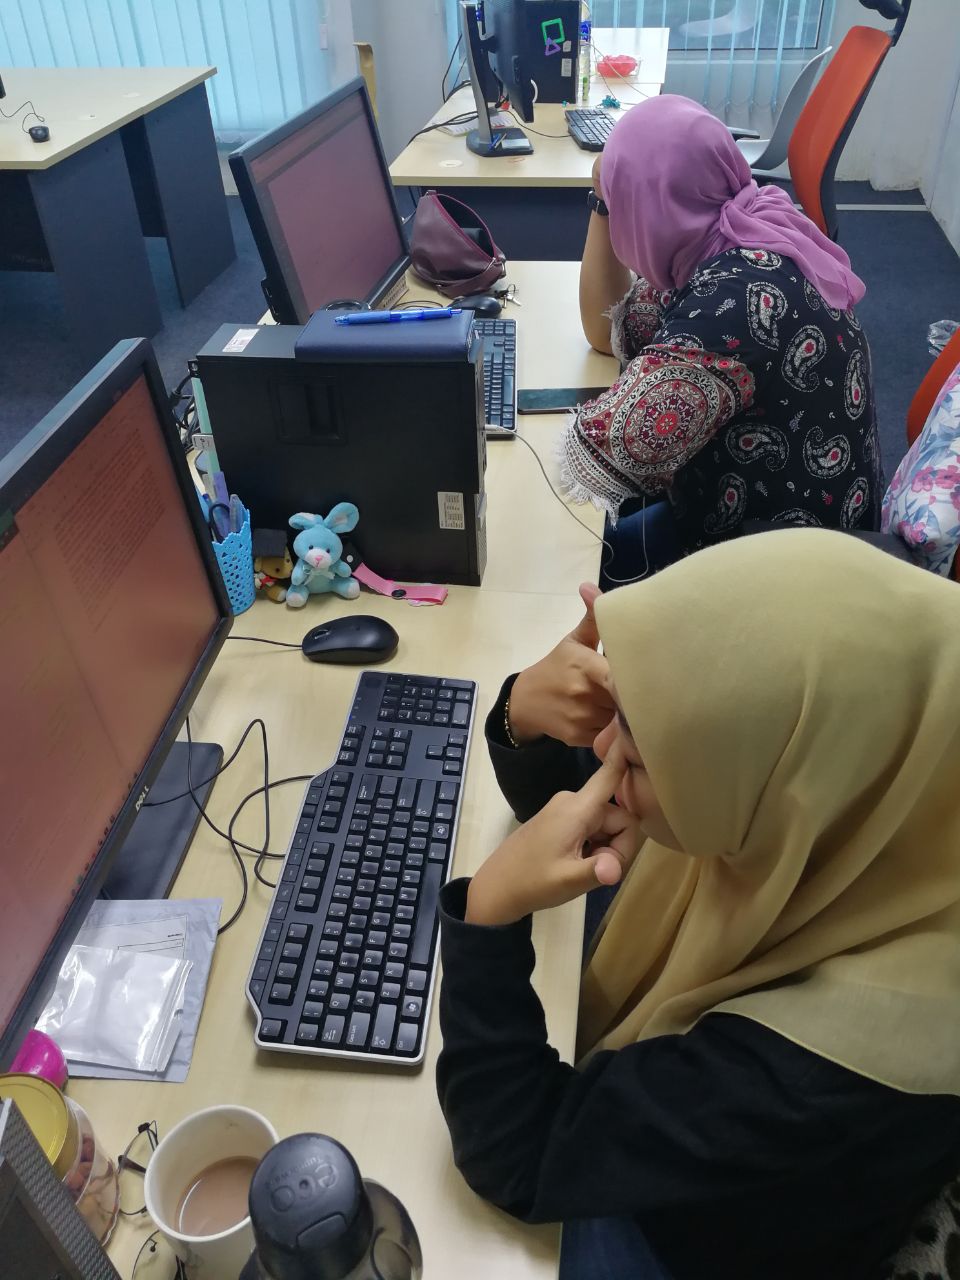 Budaya Kerja Di Malaysia Membimbangkan, Pekerja Balik On Time Dikira ‘Berdosa’